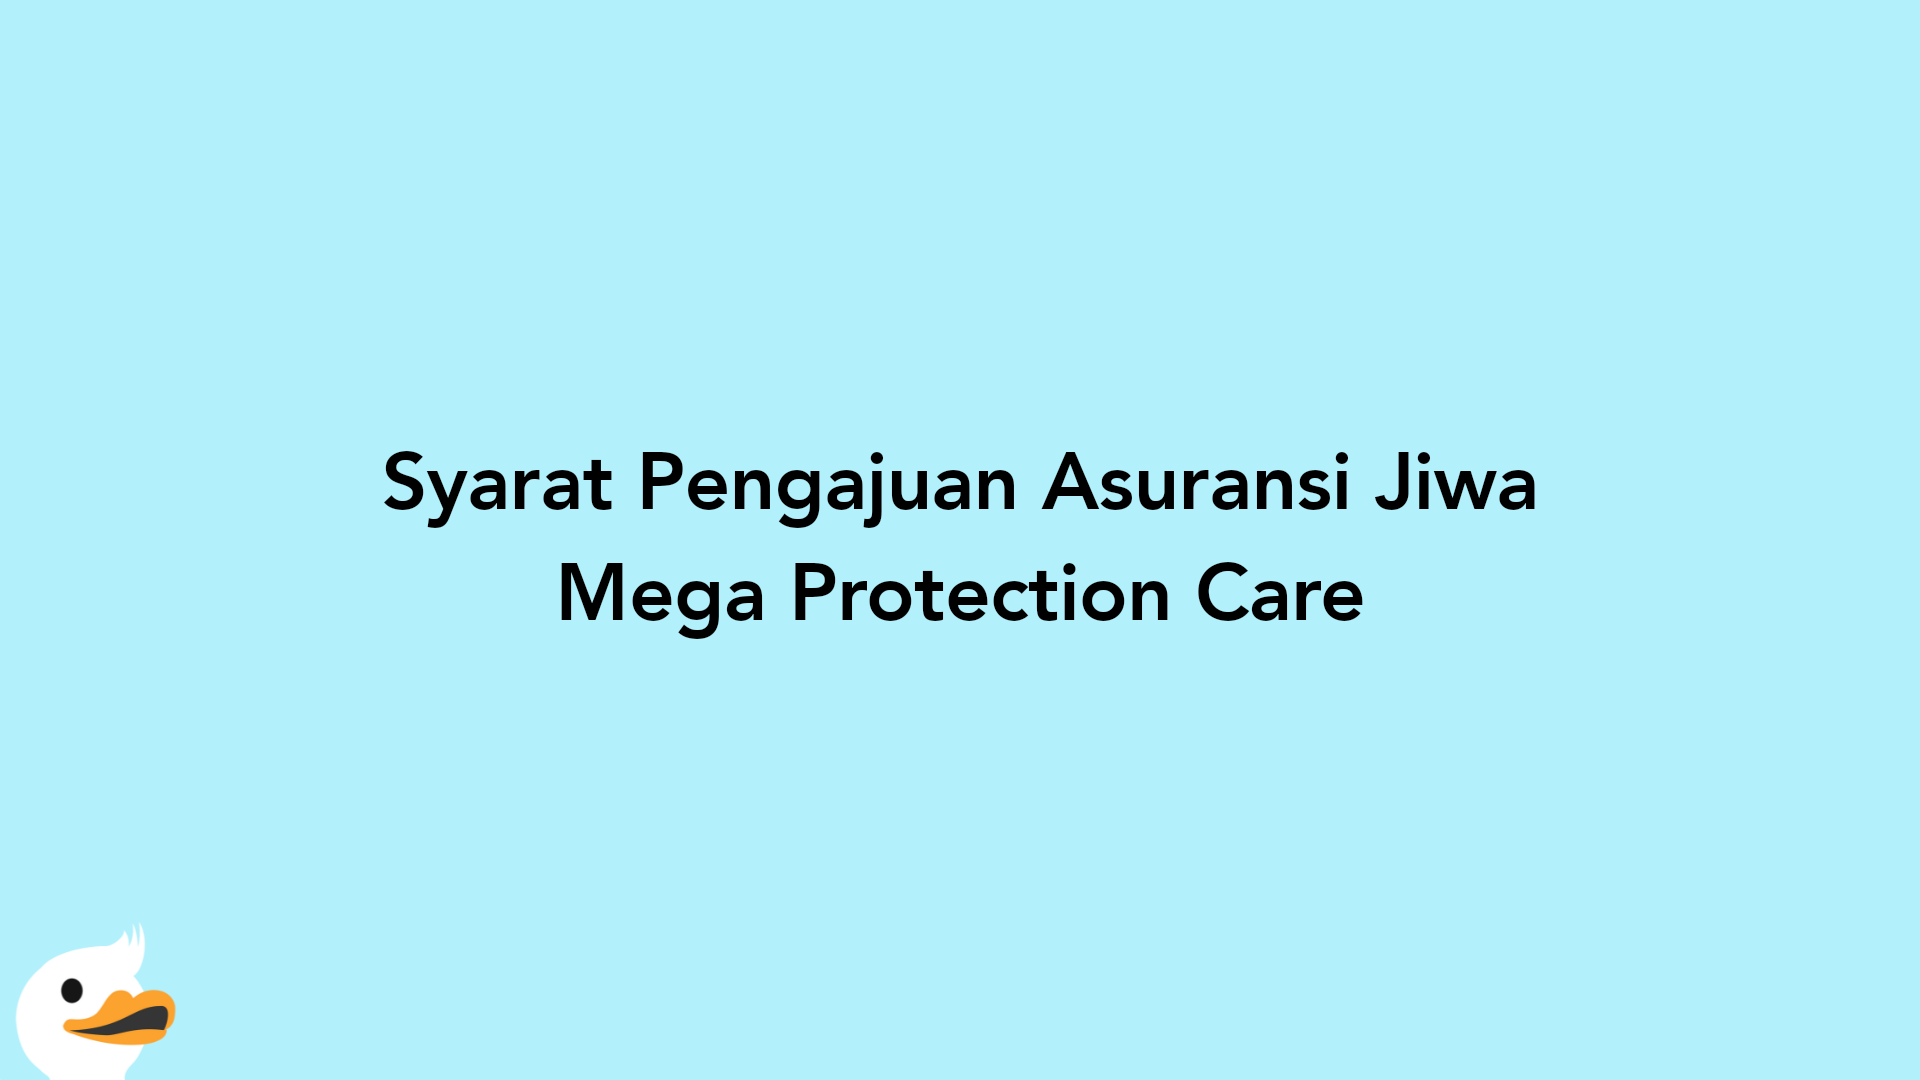 Syarat Pengajuan Asuransi Jiwa Mega Protection Care